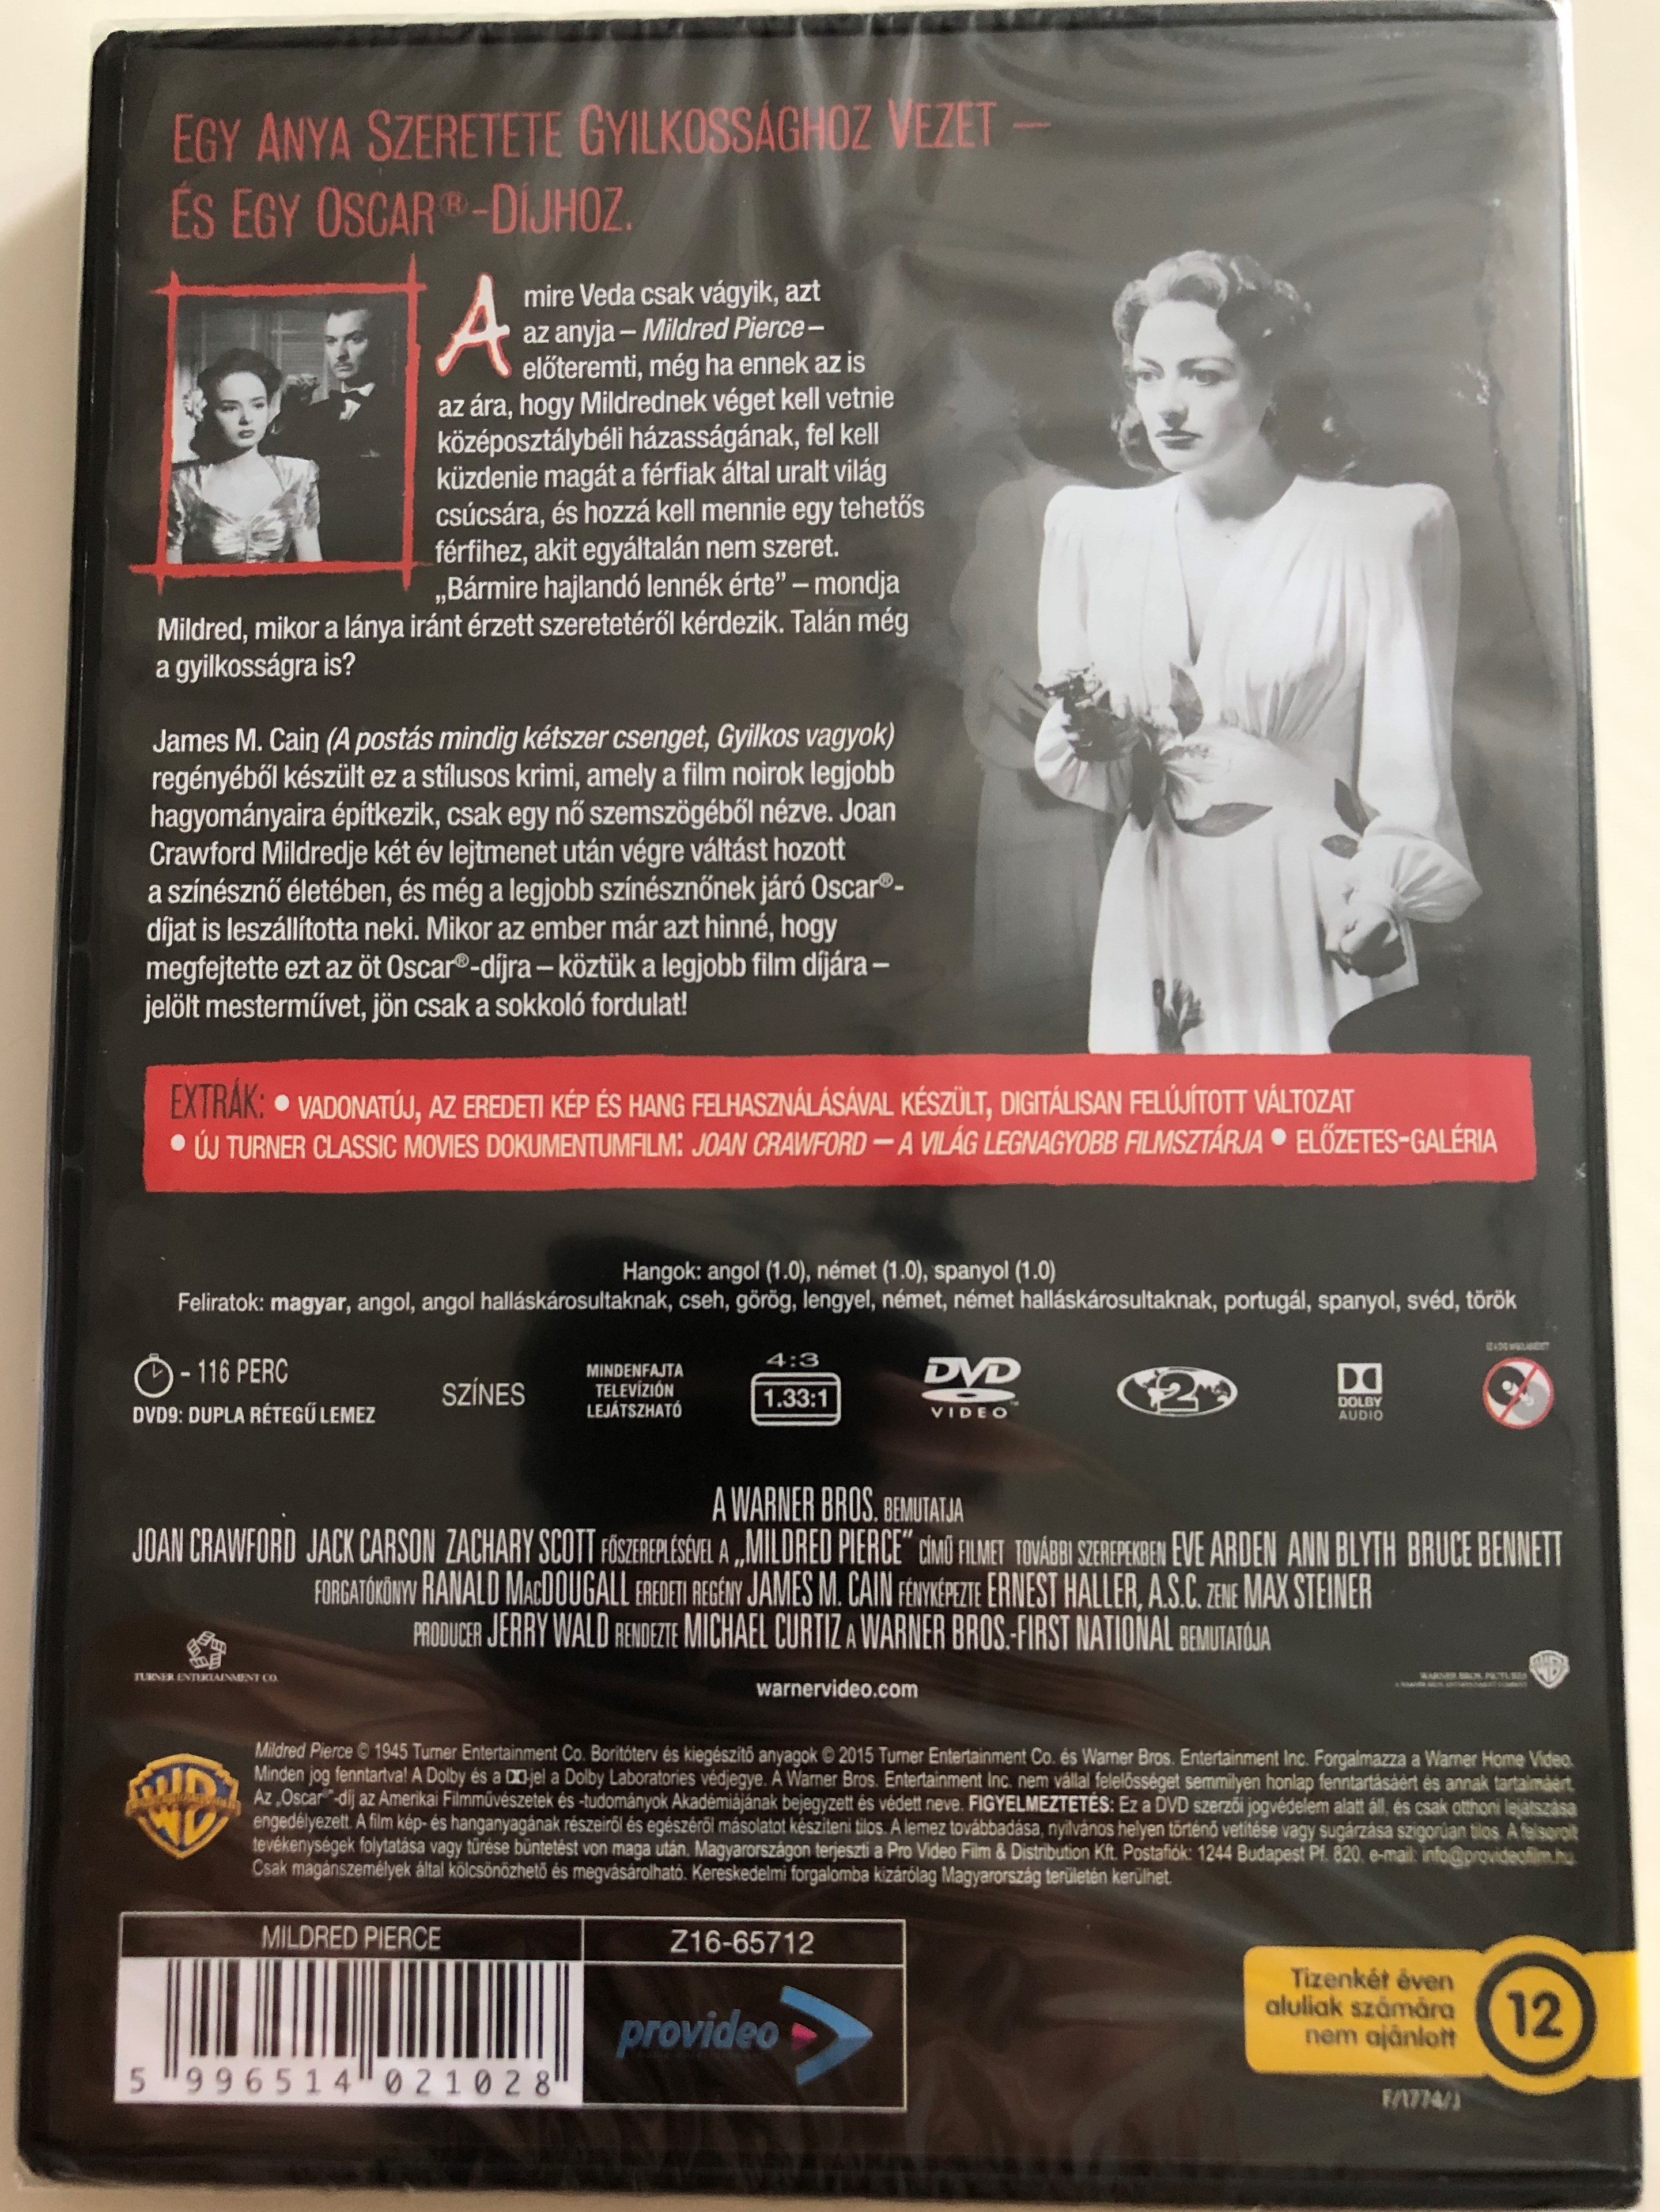 mildred-pierce-dvd-1945-directed-by-michael-curtiz-starring-joan-crawford-jack-carson-zachary-scott-american-film-noir-crime-drama-2-.jpg